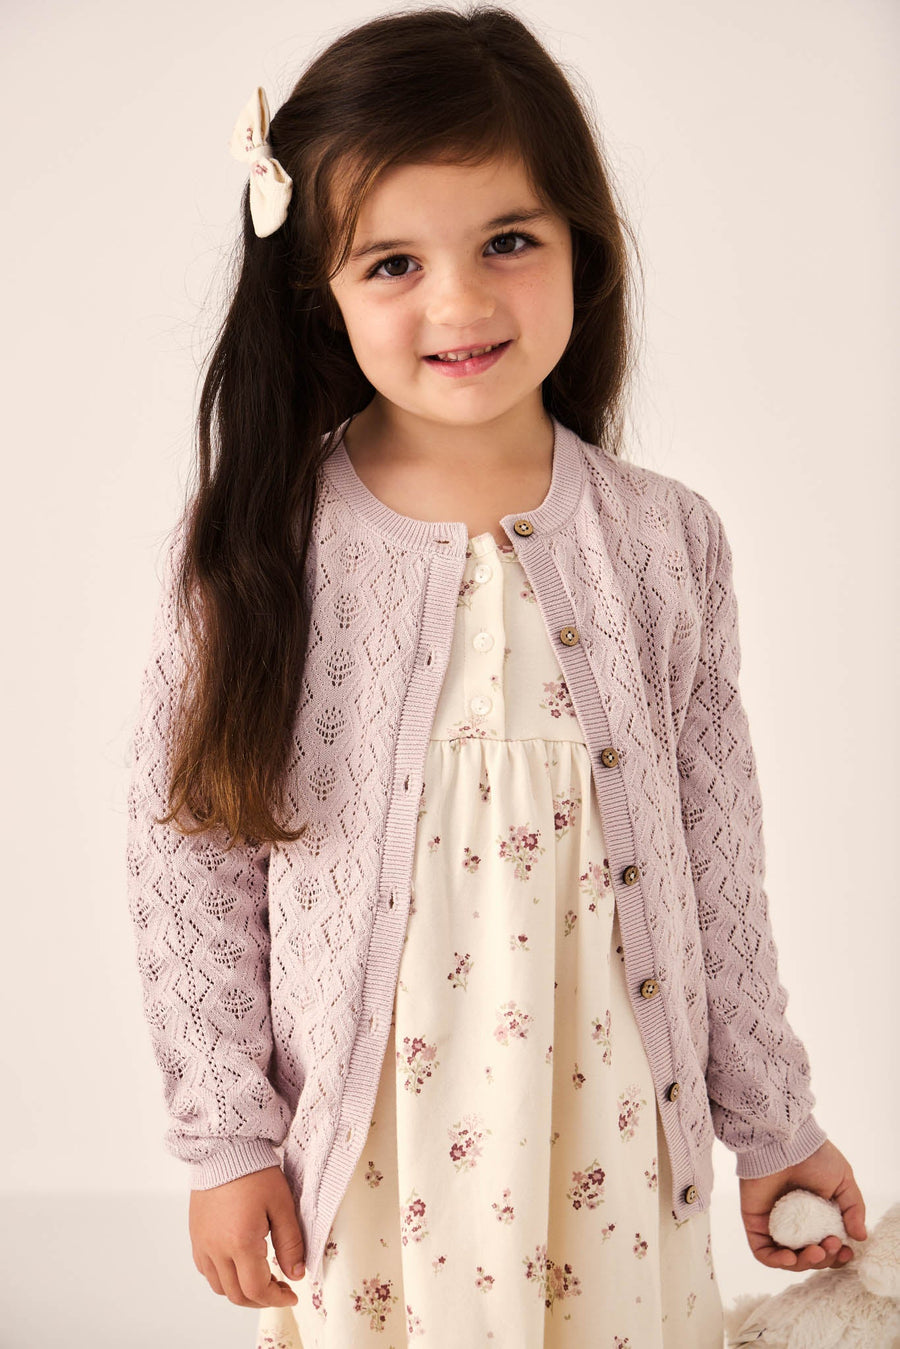 Organic Cotton Sienna Dress - Lauren Floral Tofu Childrens Dress from Jamie Kay USA